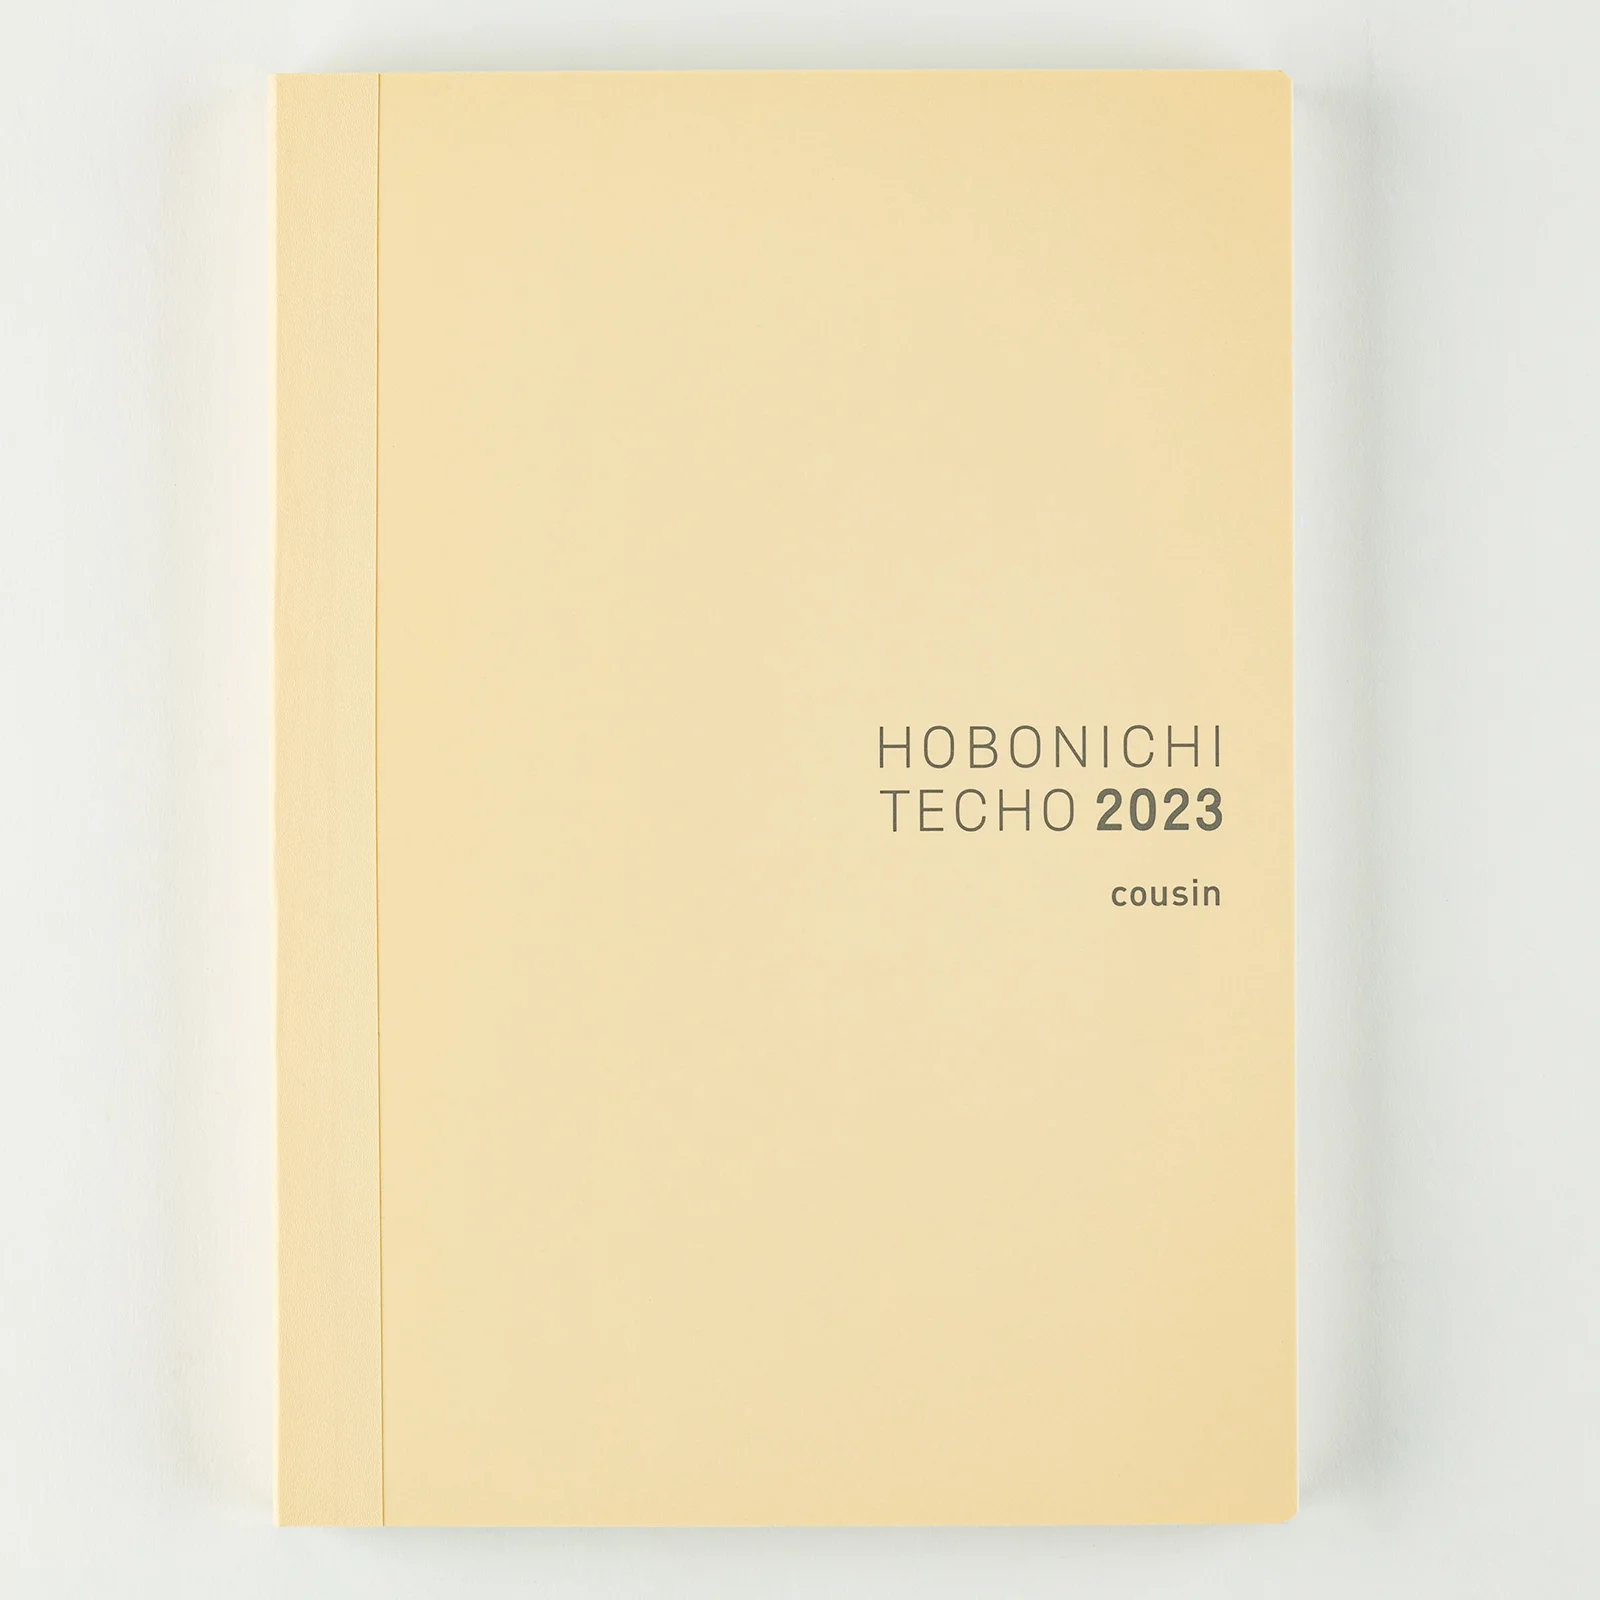 Hobonichi Techo Day-Free Book A5 Size A5 size / Monthly / Jan start / Mon  start - Techo Lineup - Techo - Hobonichi Techo 2024